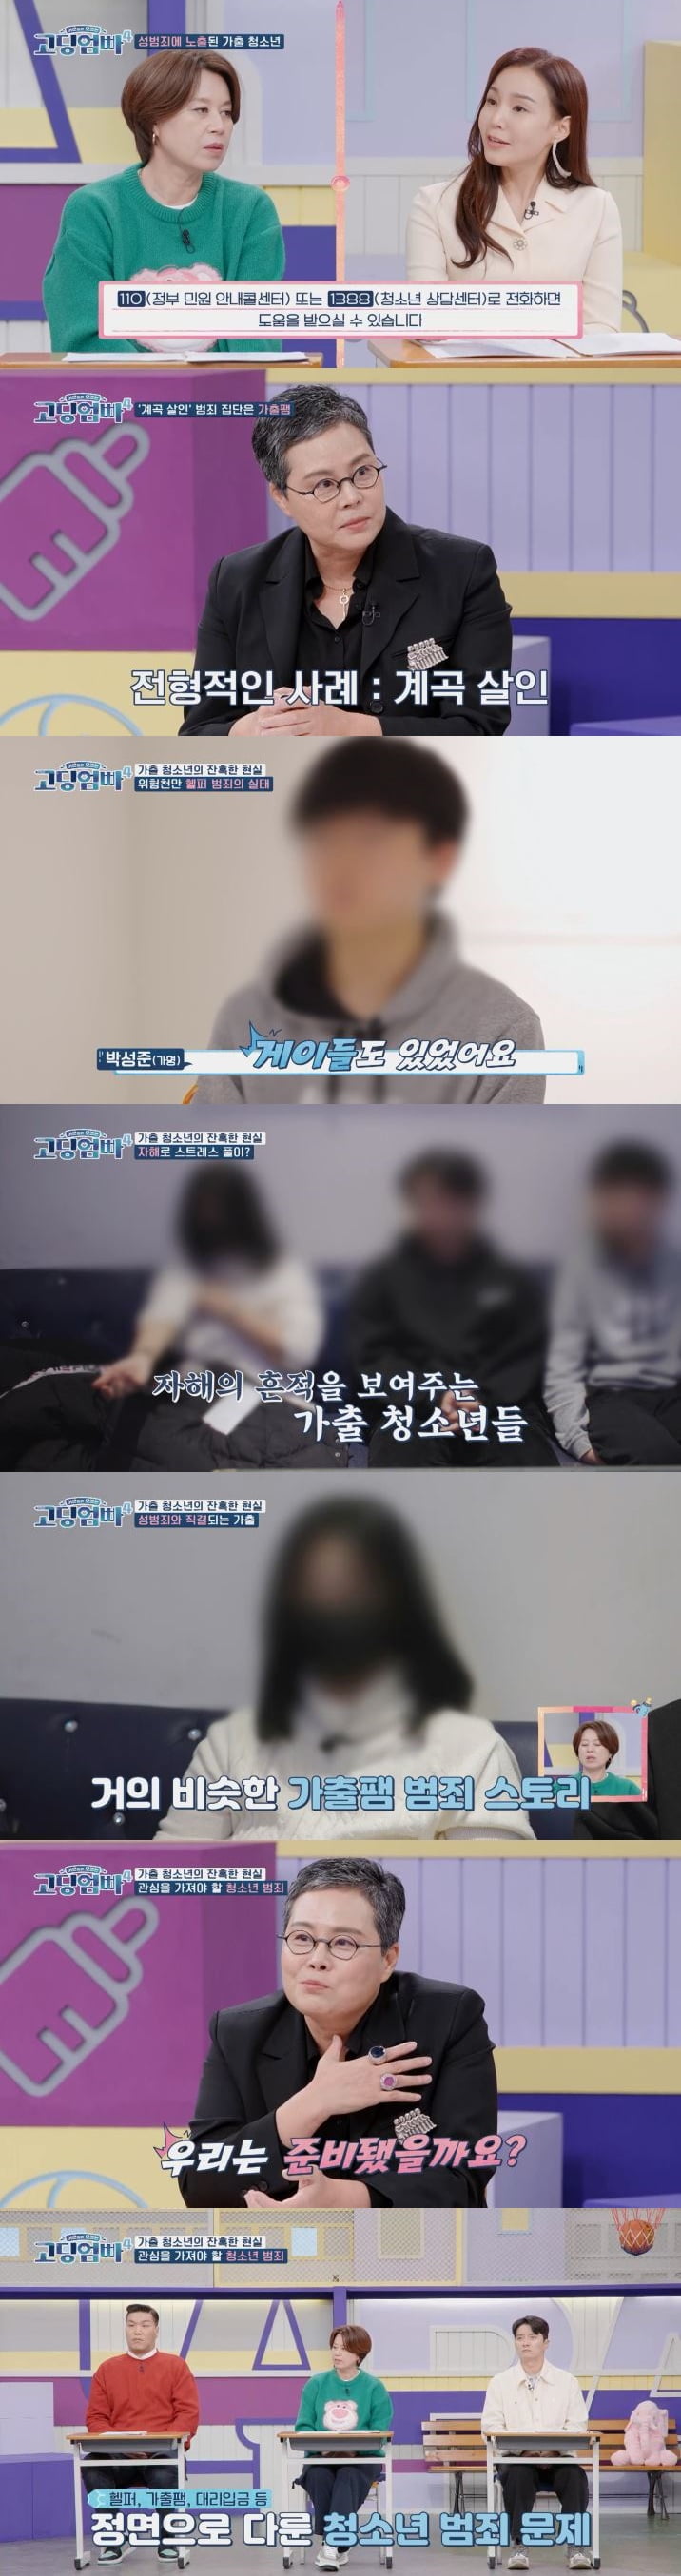 Park Ji-hyun was threatened with a hidden camera